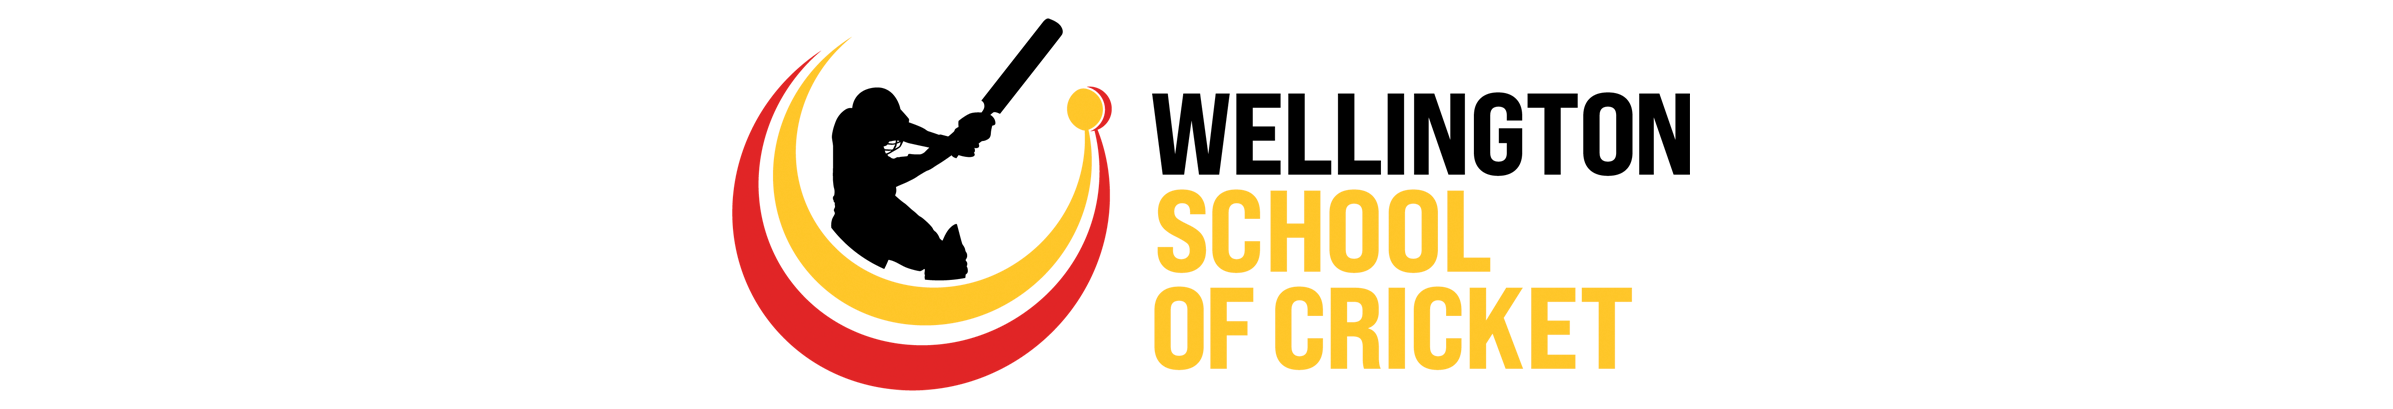 Cricket Wellington - Wellington School of Cricket